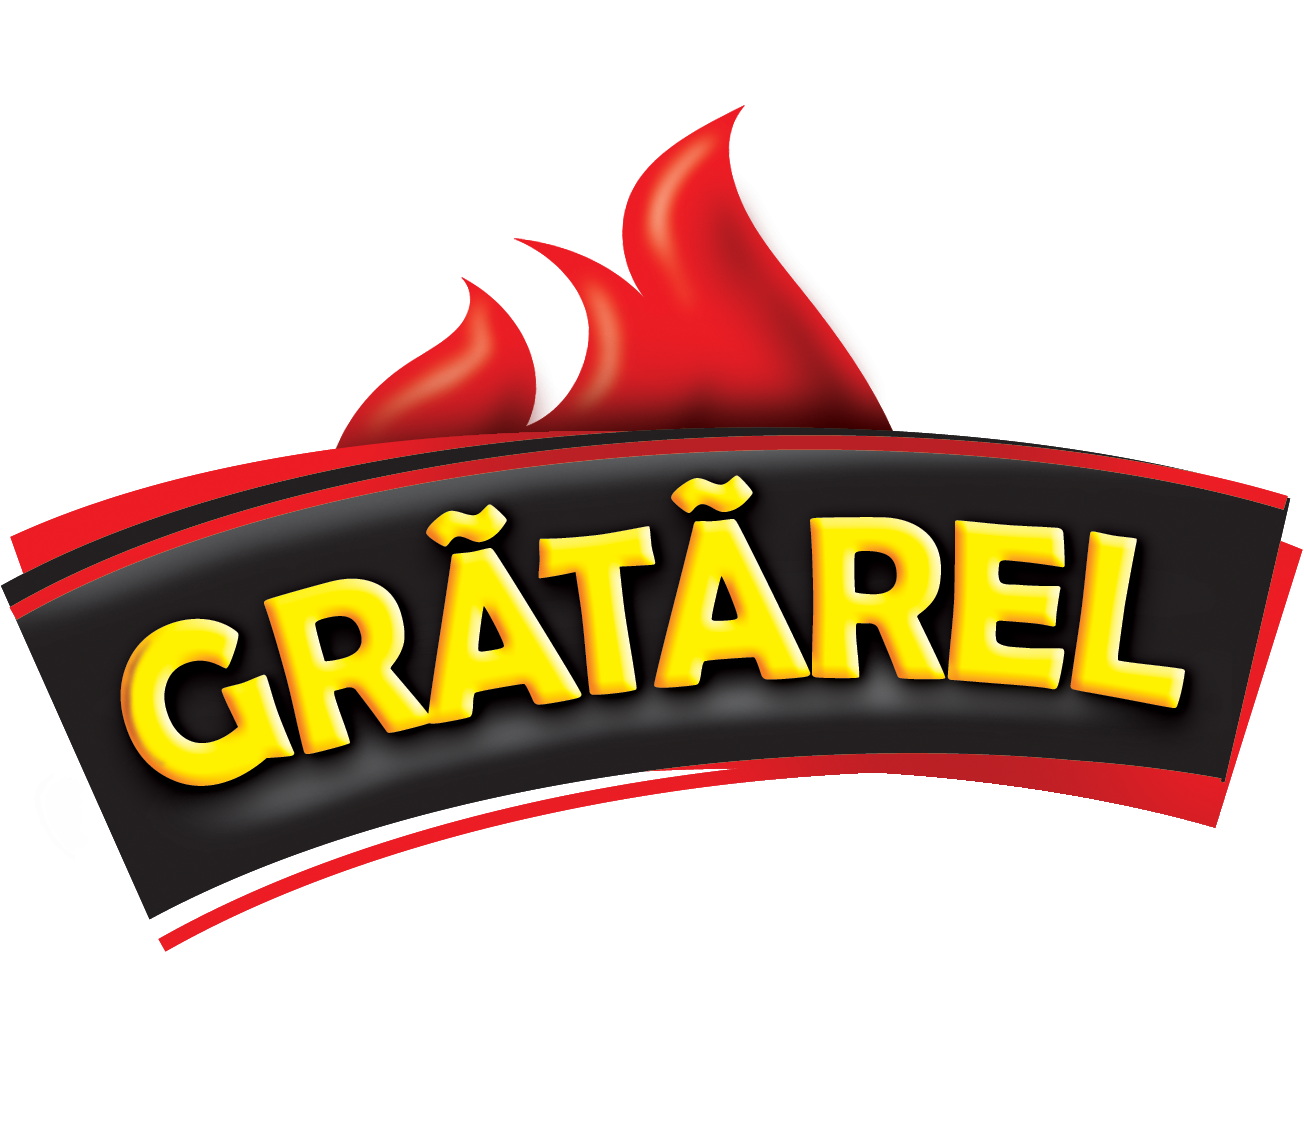 Gratarel